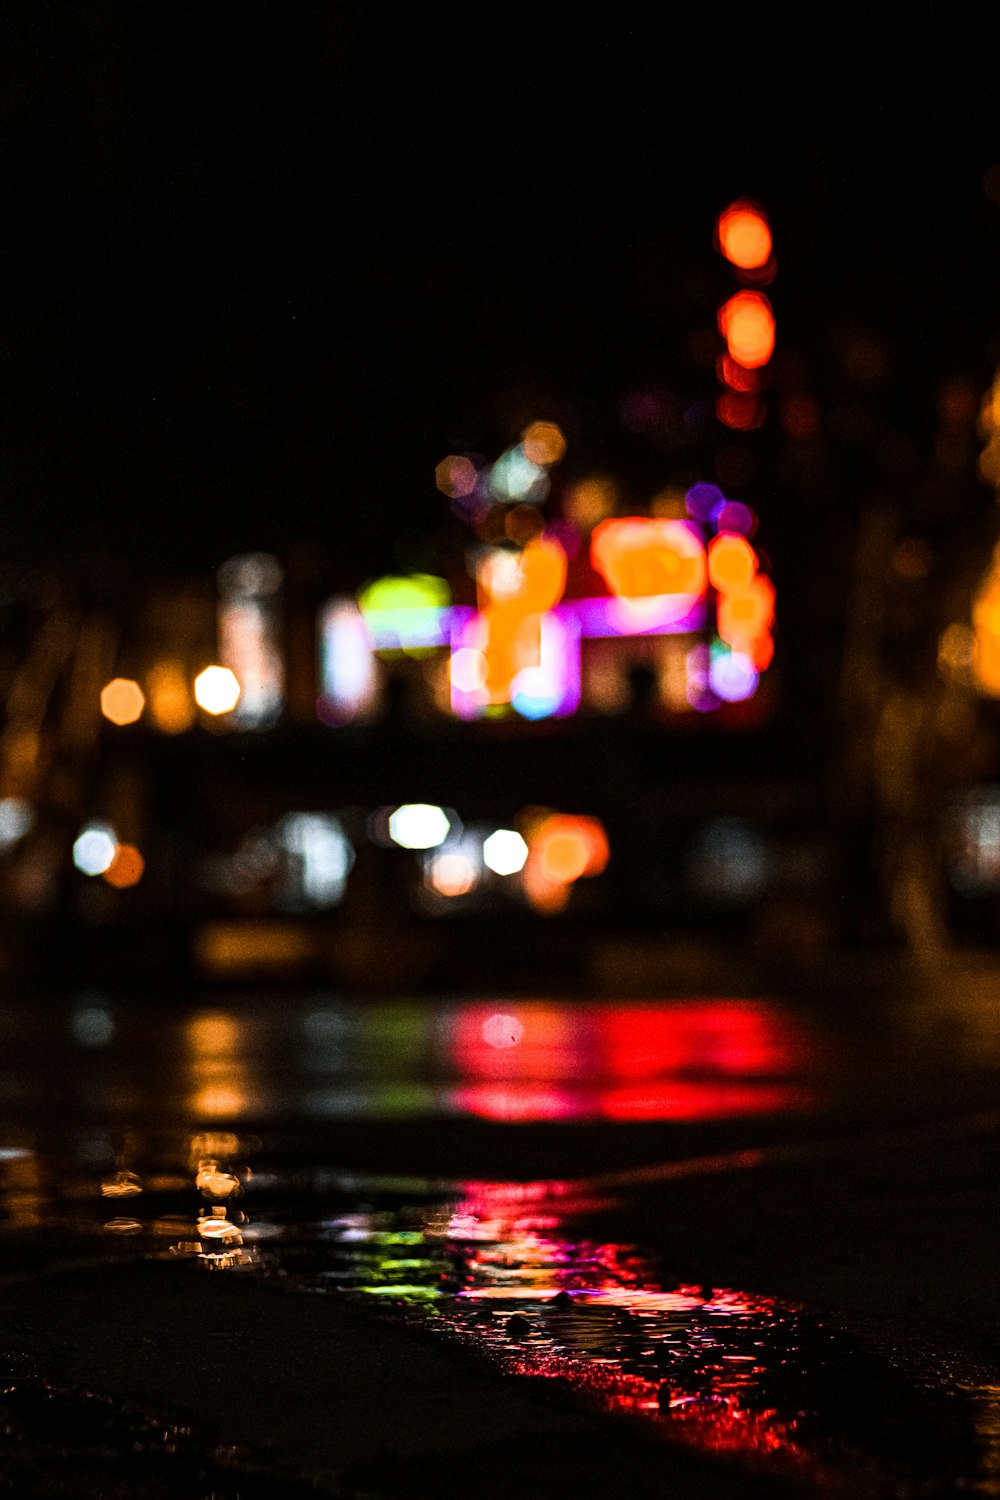 bokeh photography of city lights during night time photo – Free Taipei  Image on Unsplash